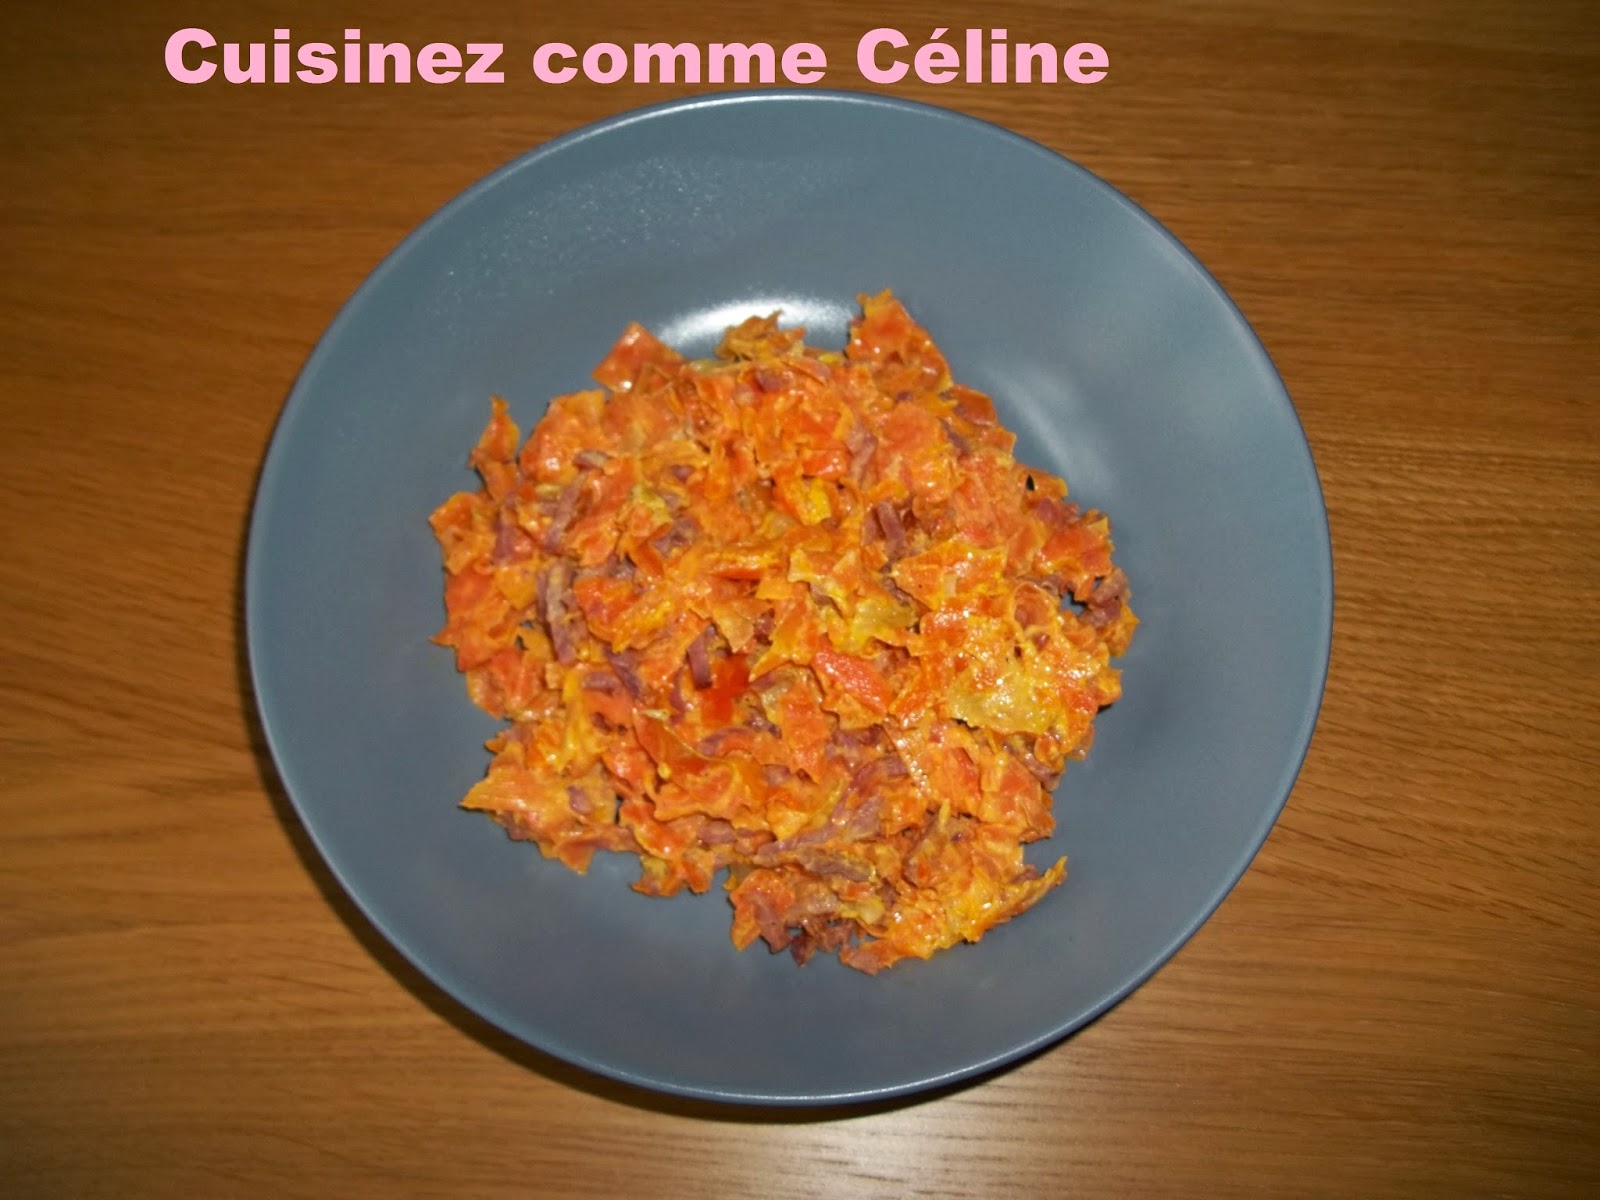 http://cuisinezcommeceline.blogspot.fr/2015/02/tagliatellesde-carottes-bacon-et-creme.html